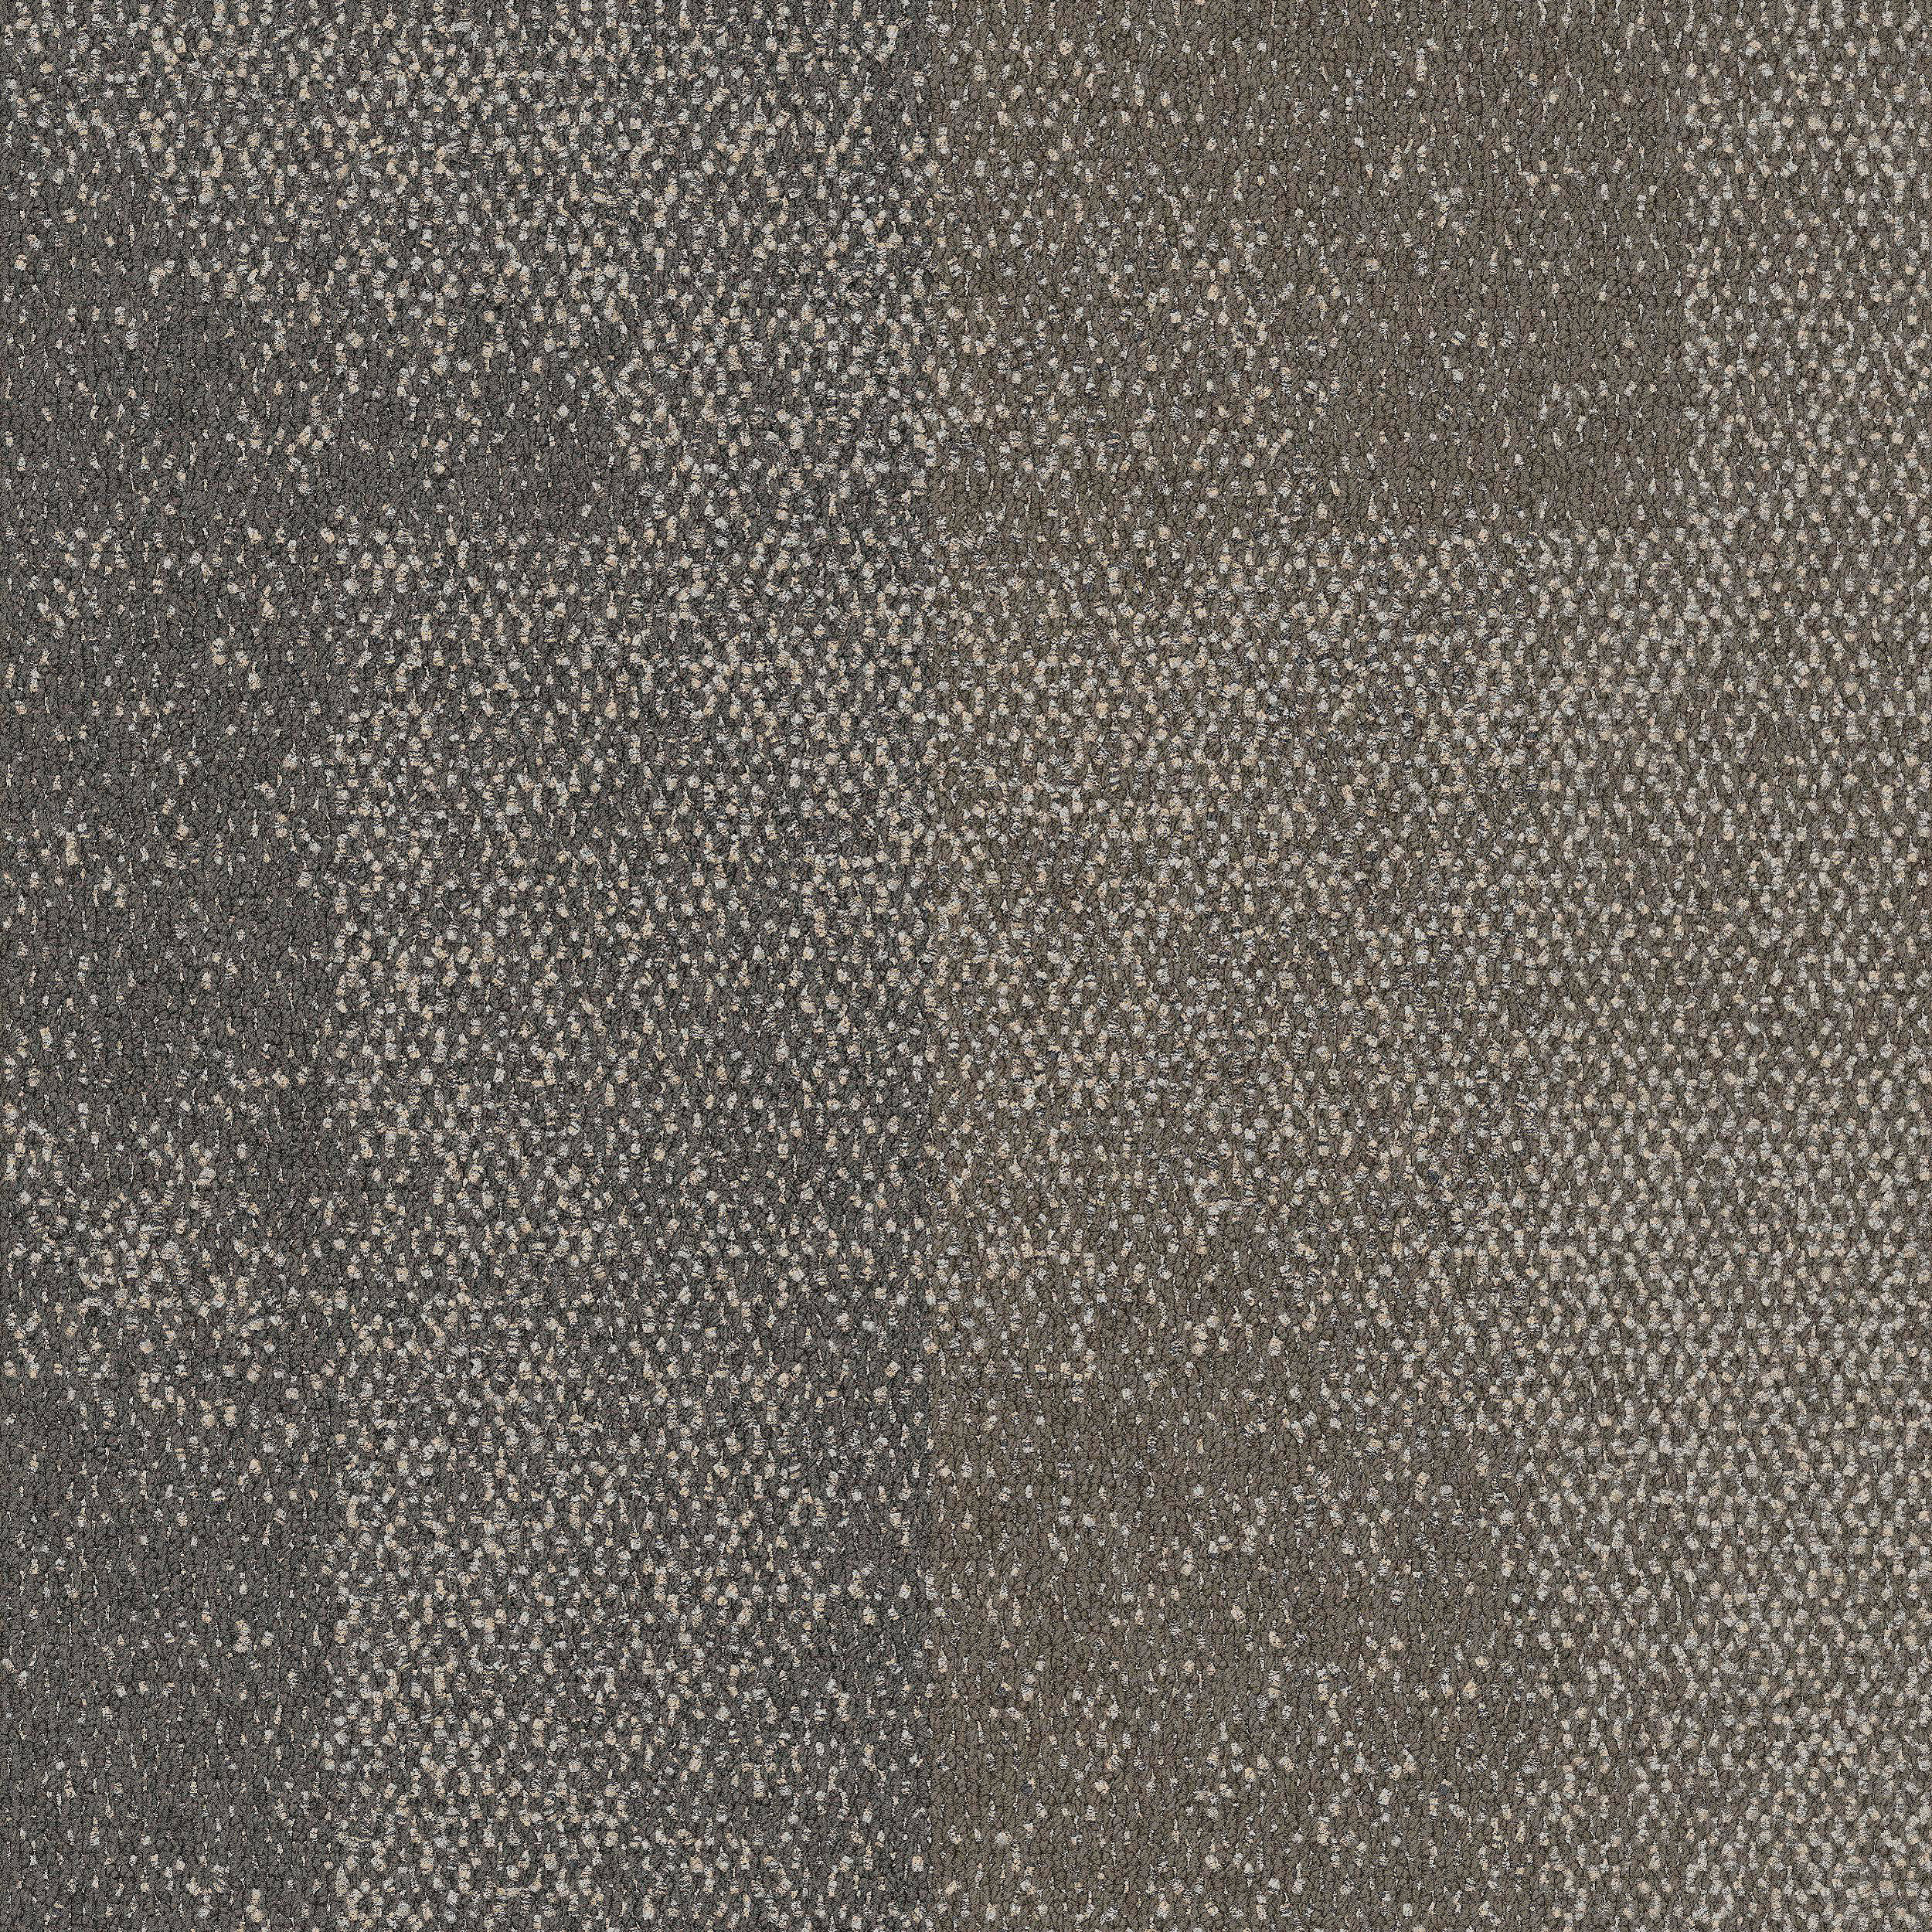 Exposed Carpet Tile In Iron Works imagen número 11